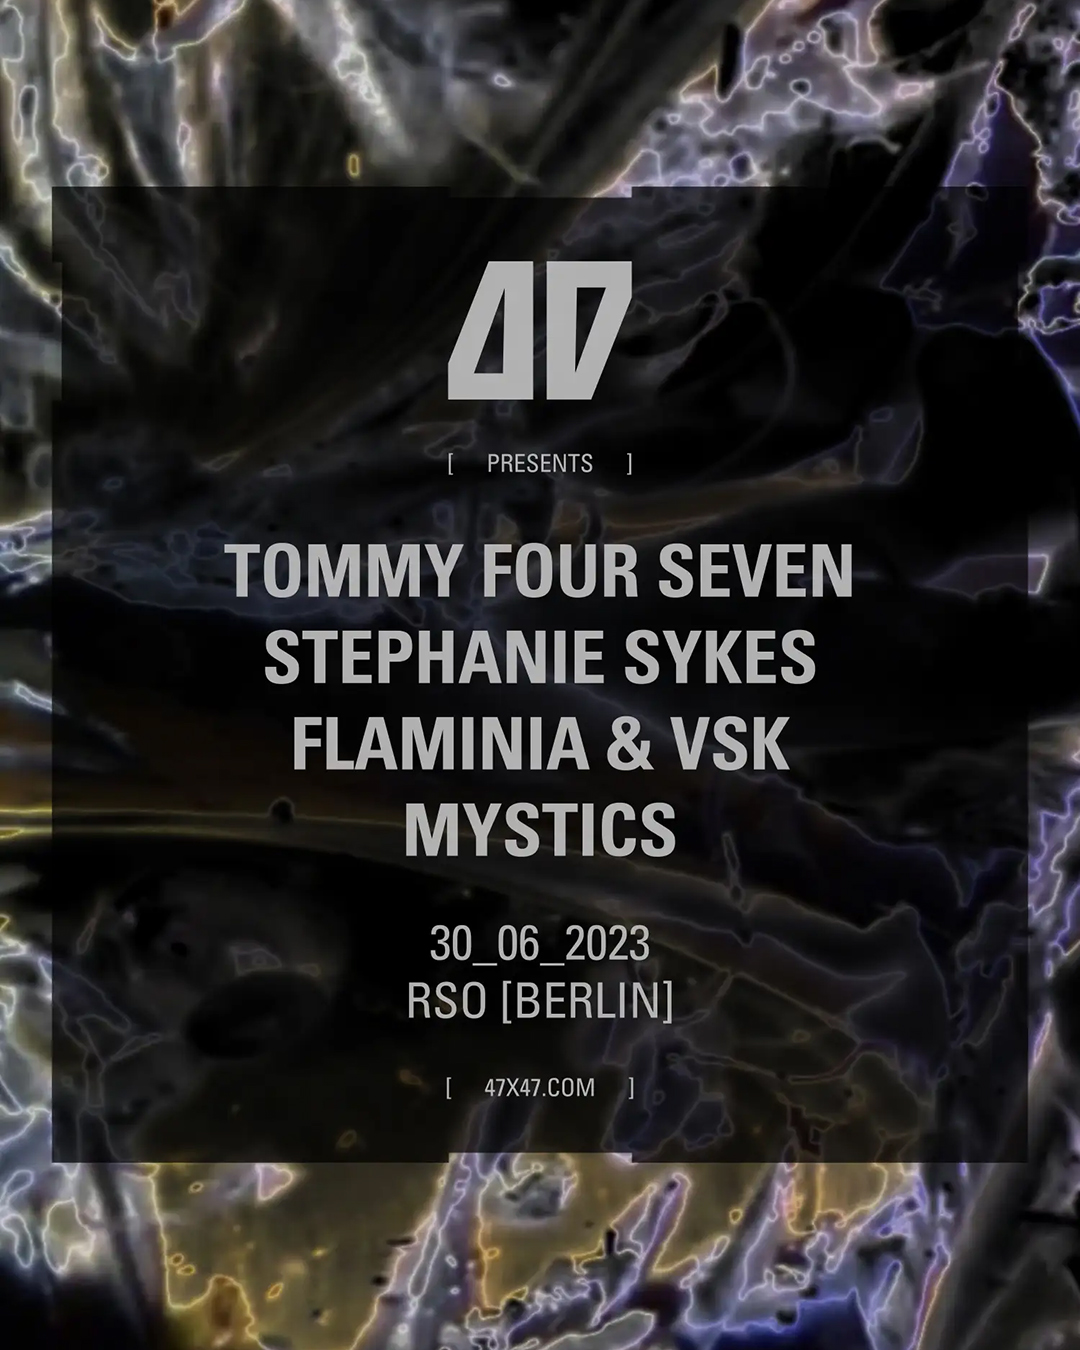 30.06.   47 with Tommy Four Seven, Stephanie Sykes, Flaminia & VSK, Mystics